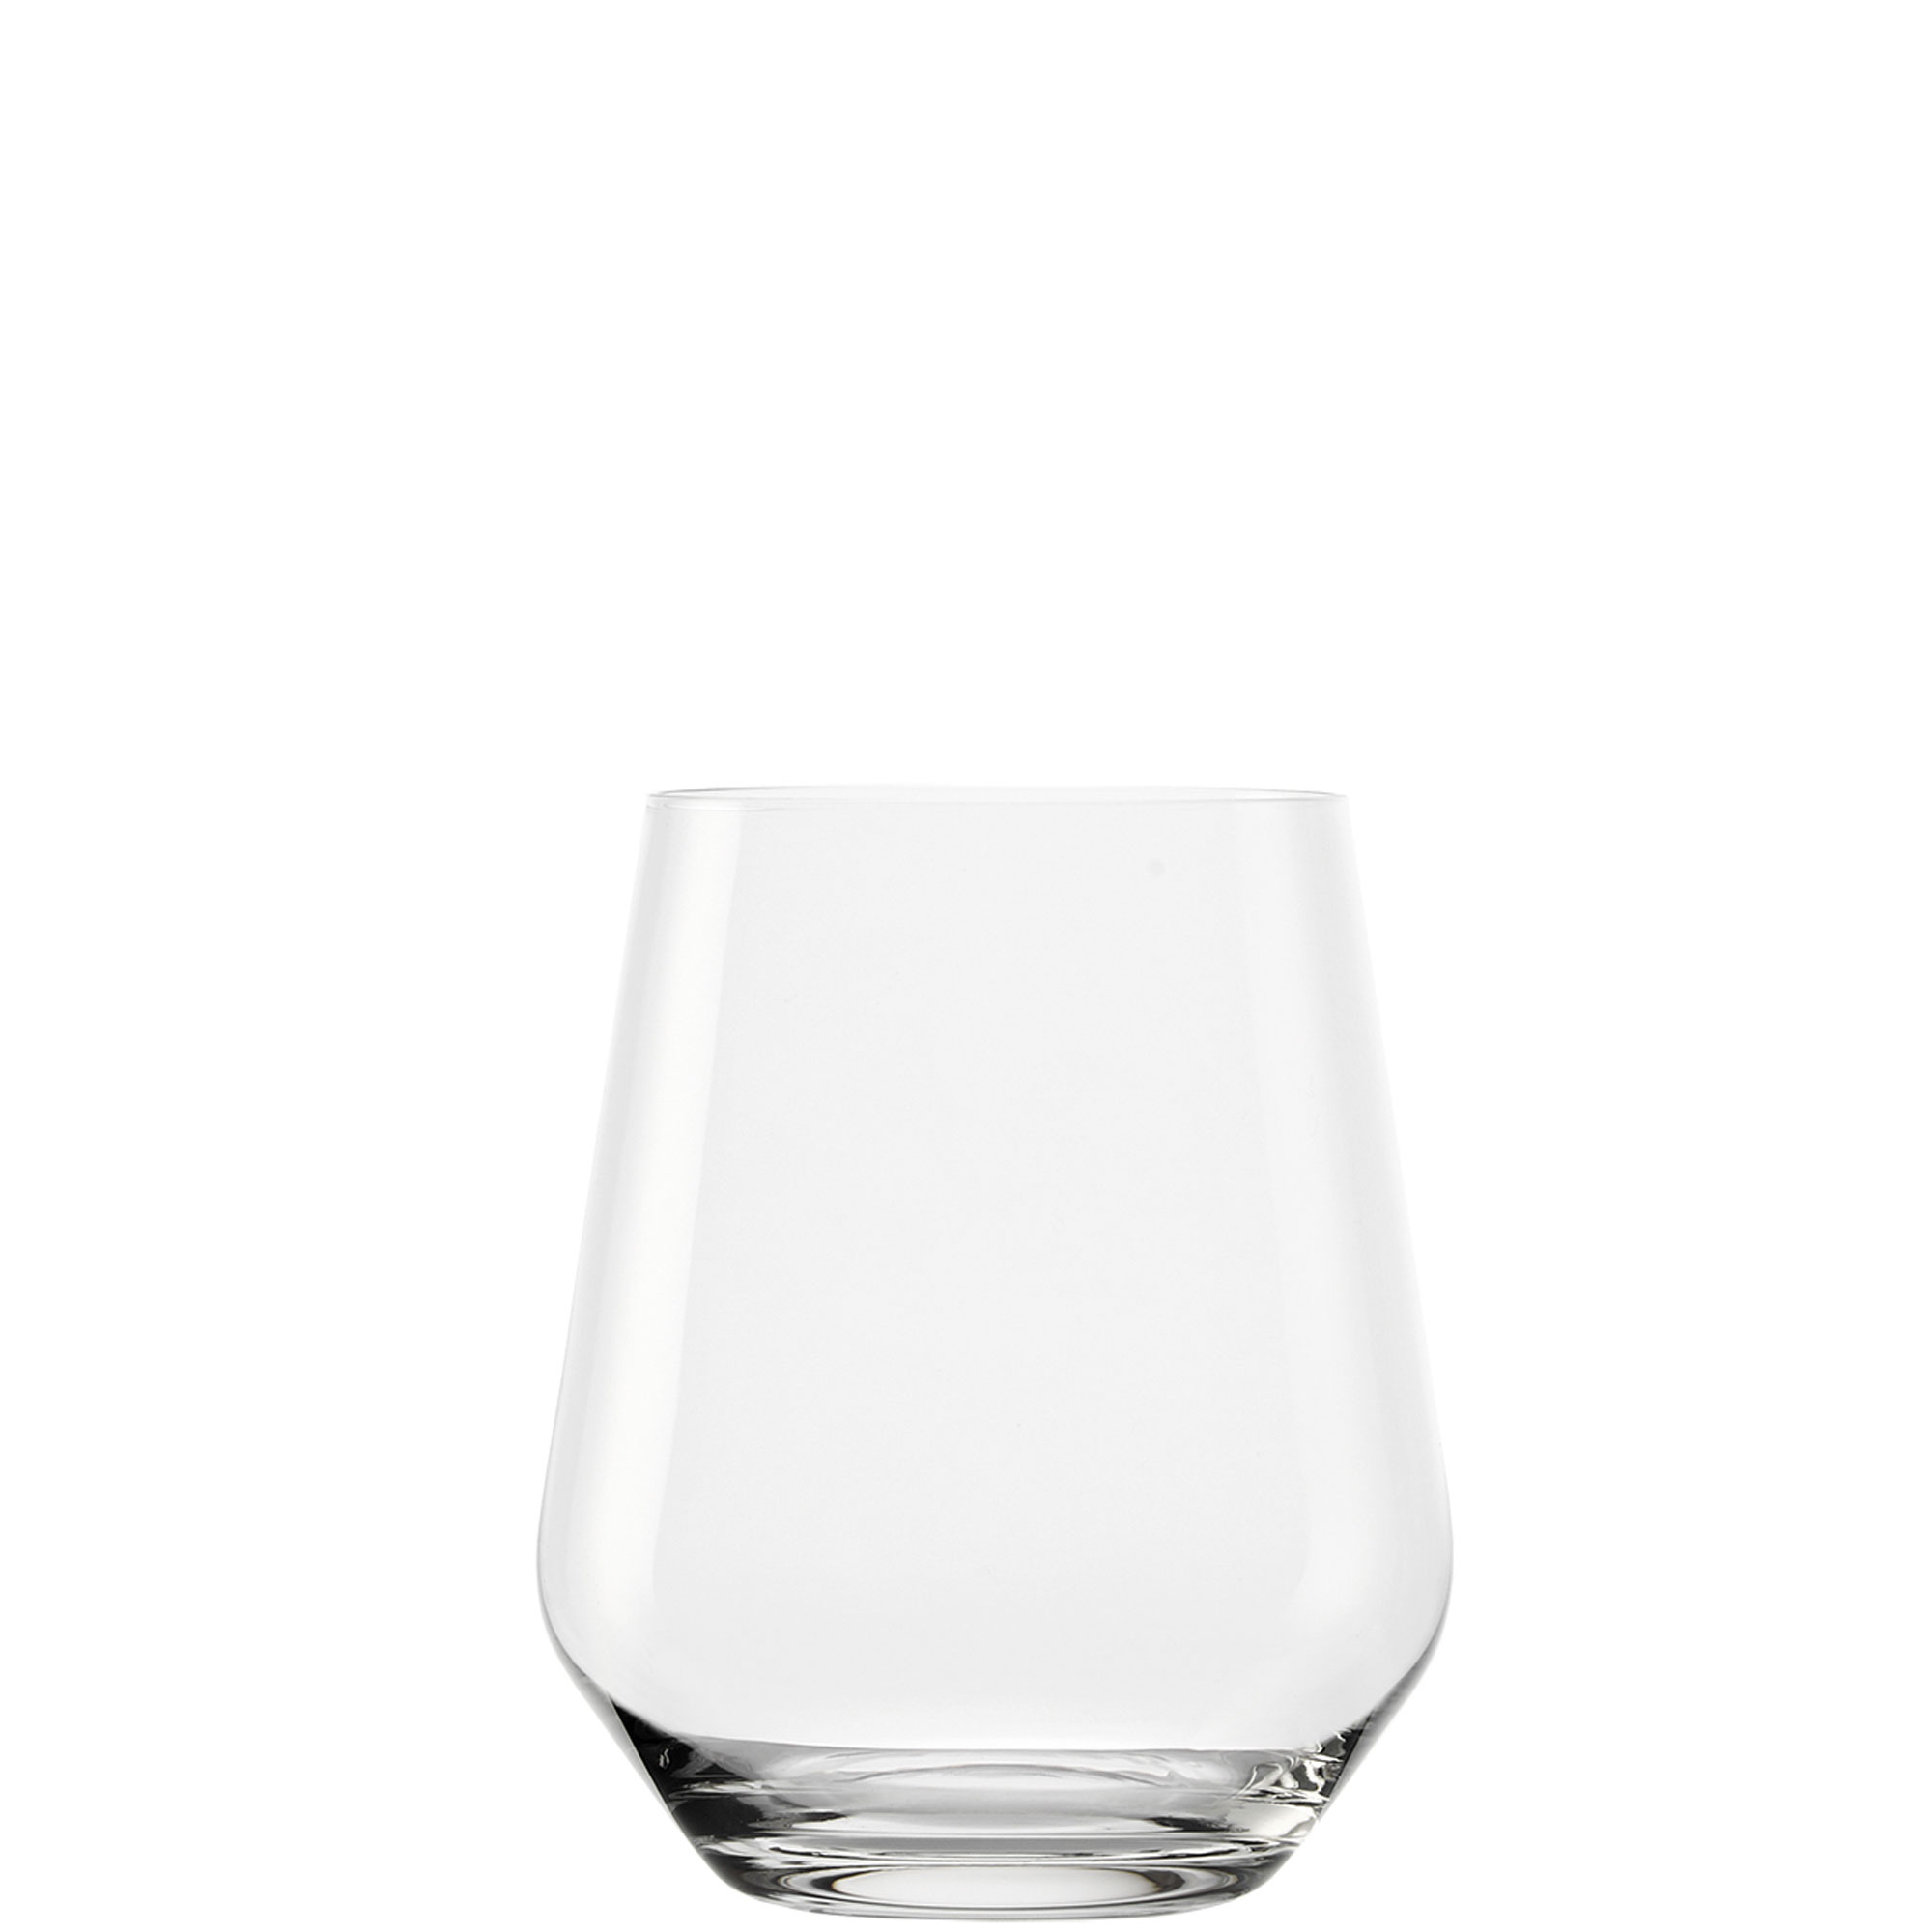 Whiskyglas S.O.F. Quatrophil, Stölzle - 370ml